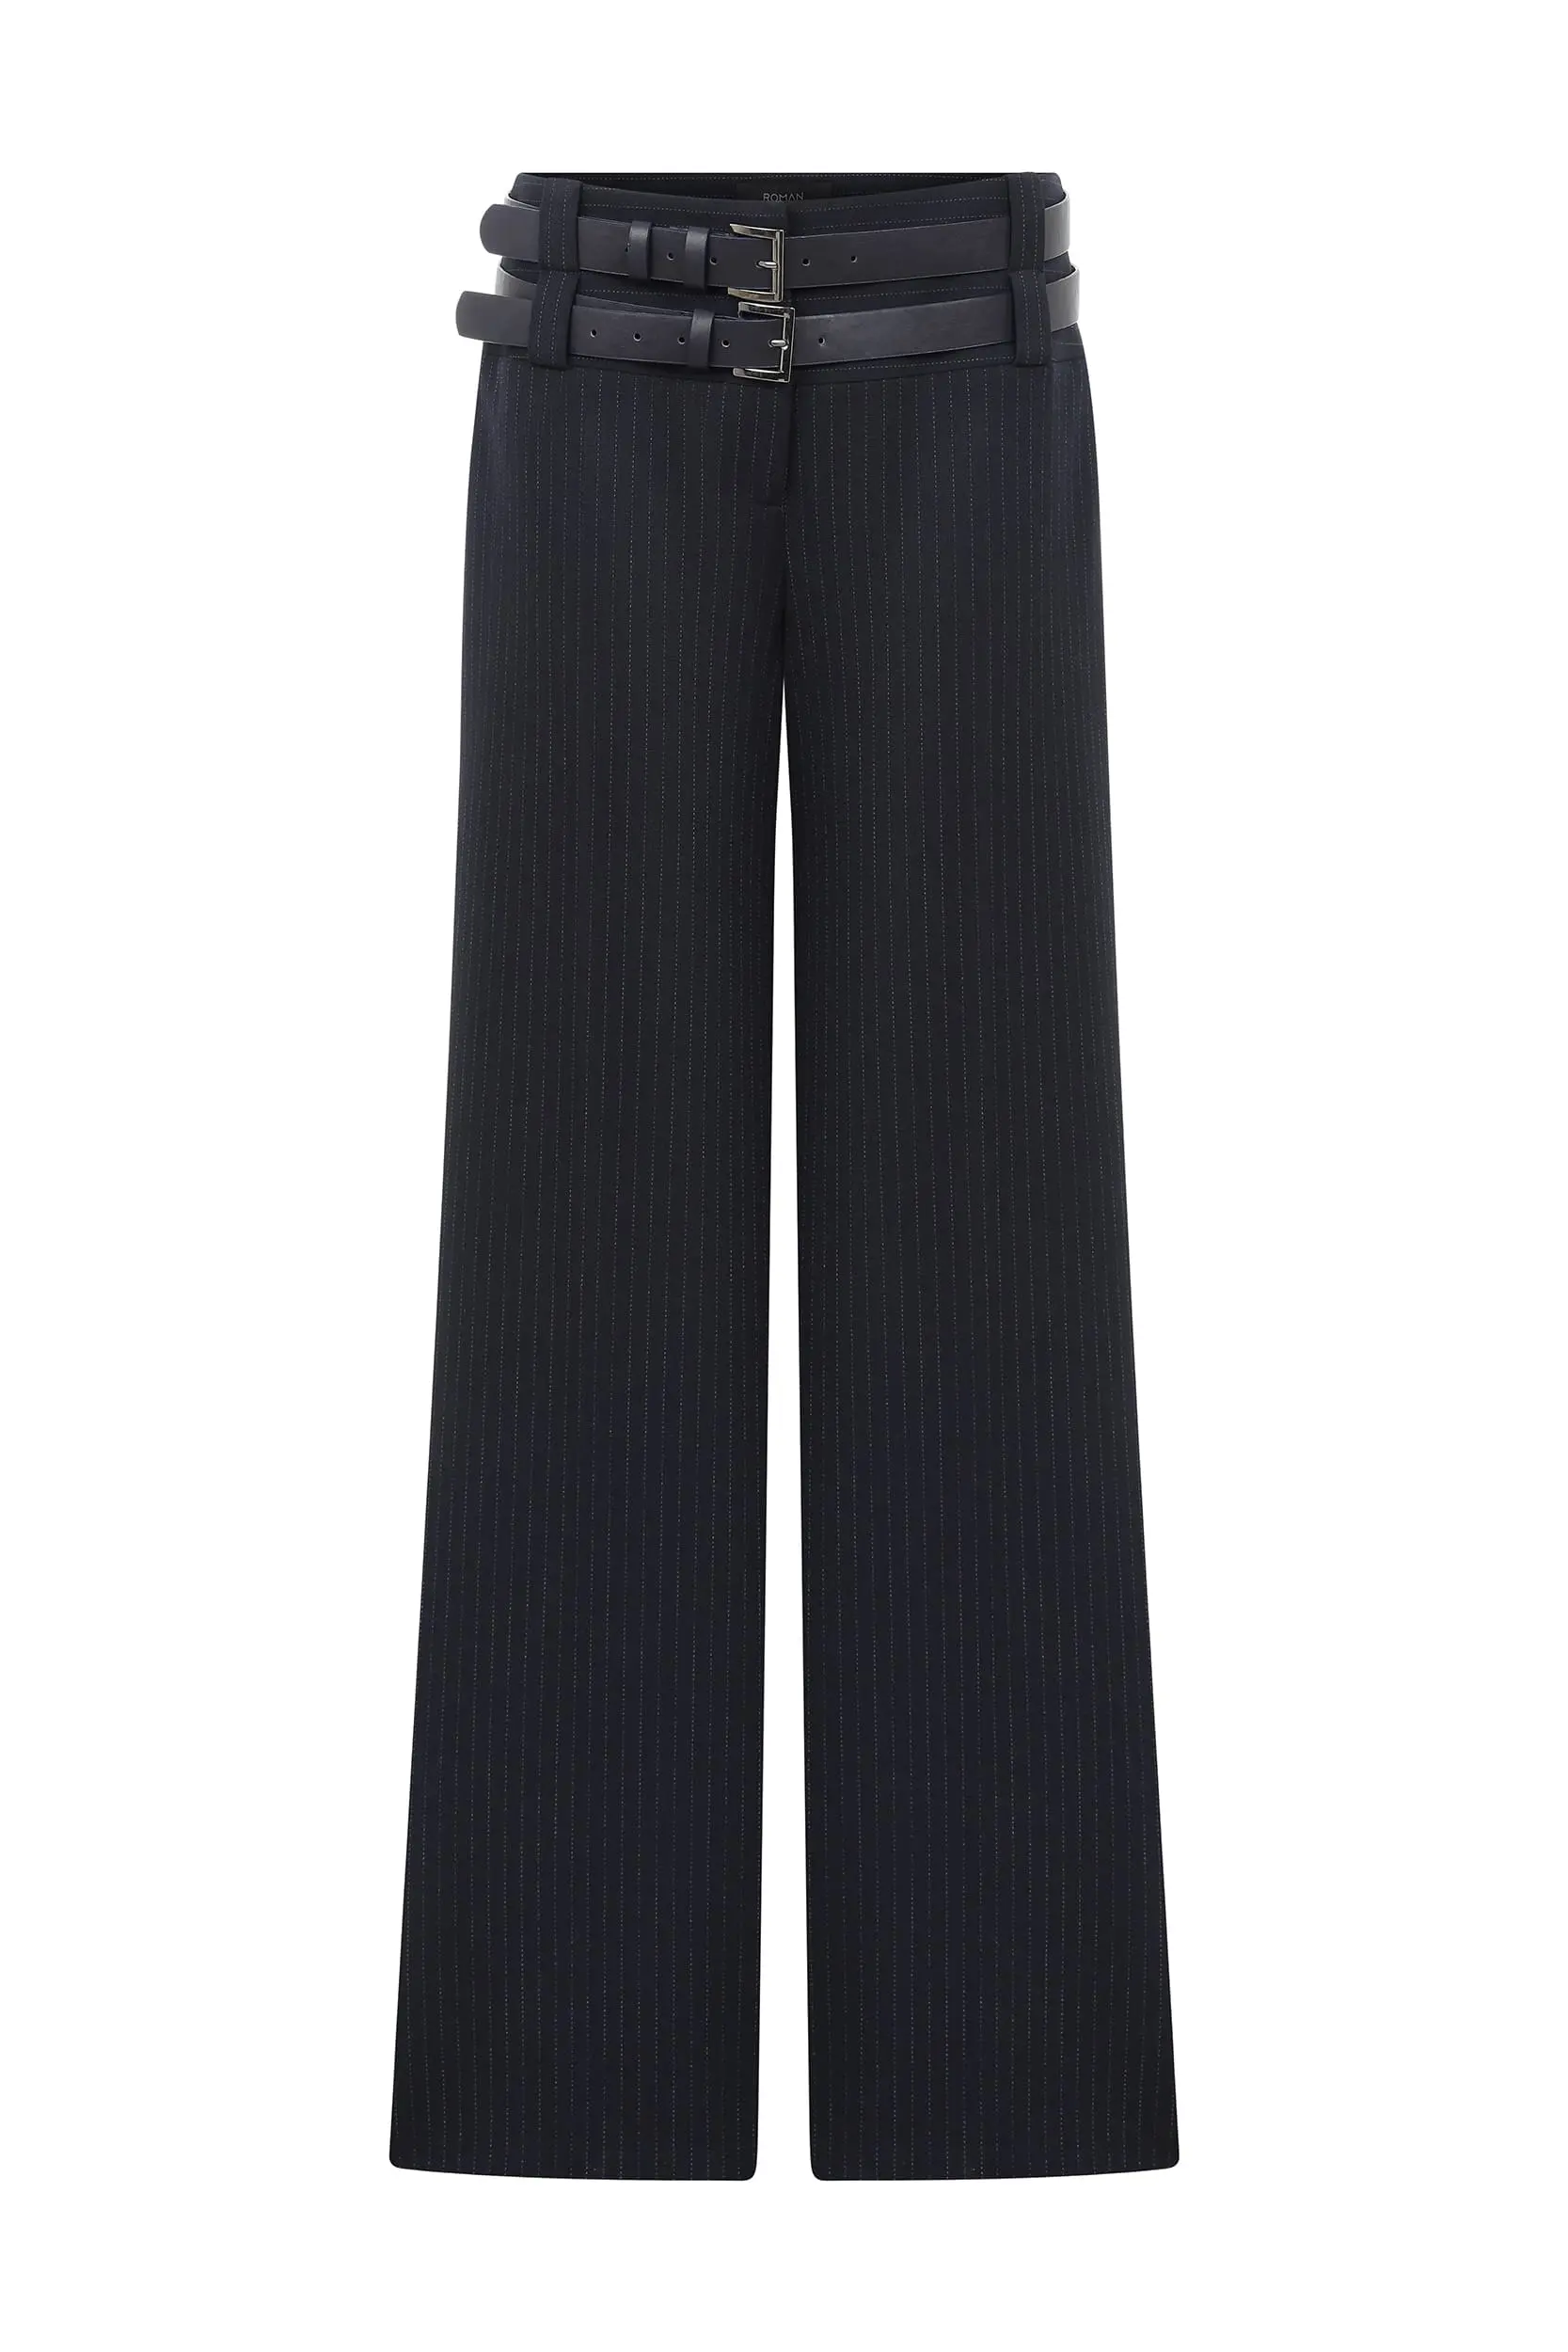 Roman Double Belt Striped Navy Blue Formal Pants - 2 / Navy. 1